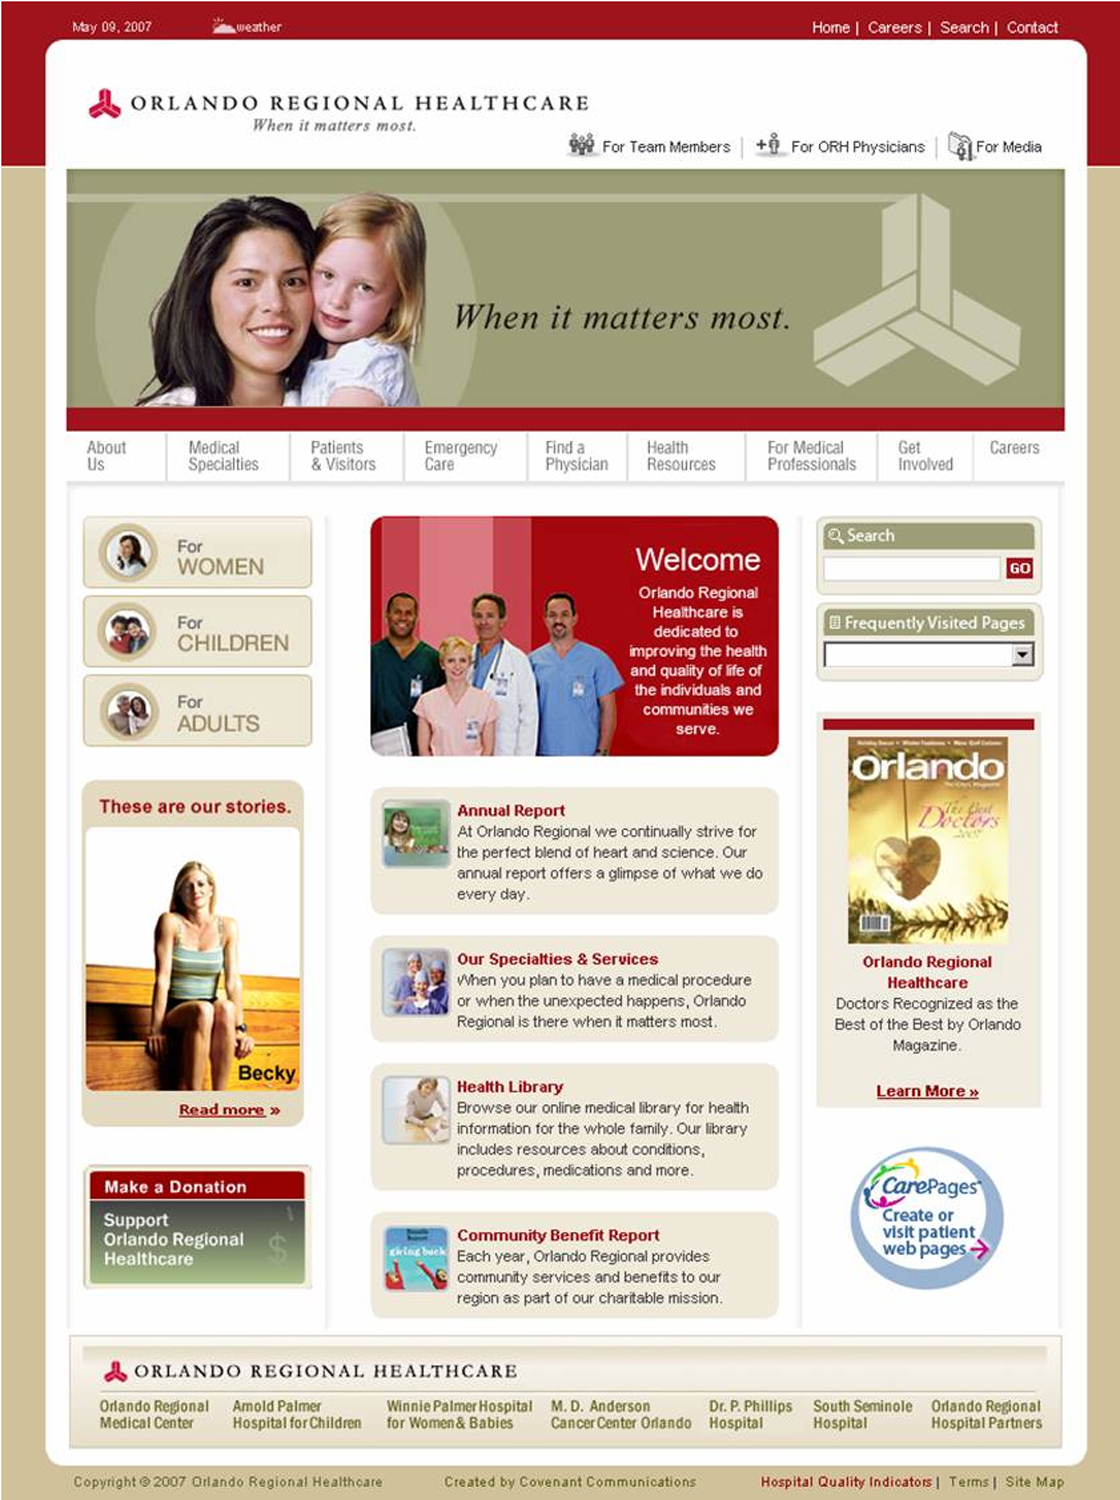 Orlando Regional Healthcare Website image